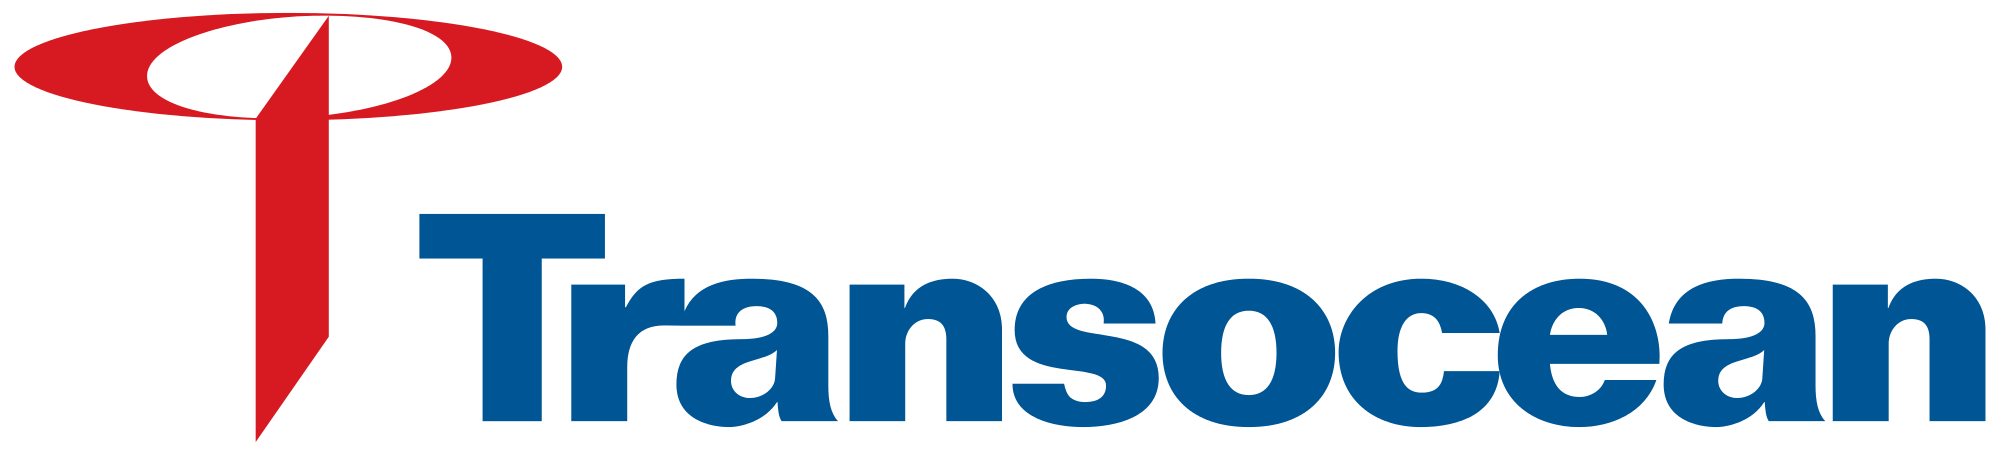 1 Transocean logo.svg